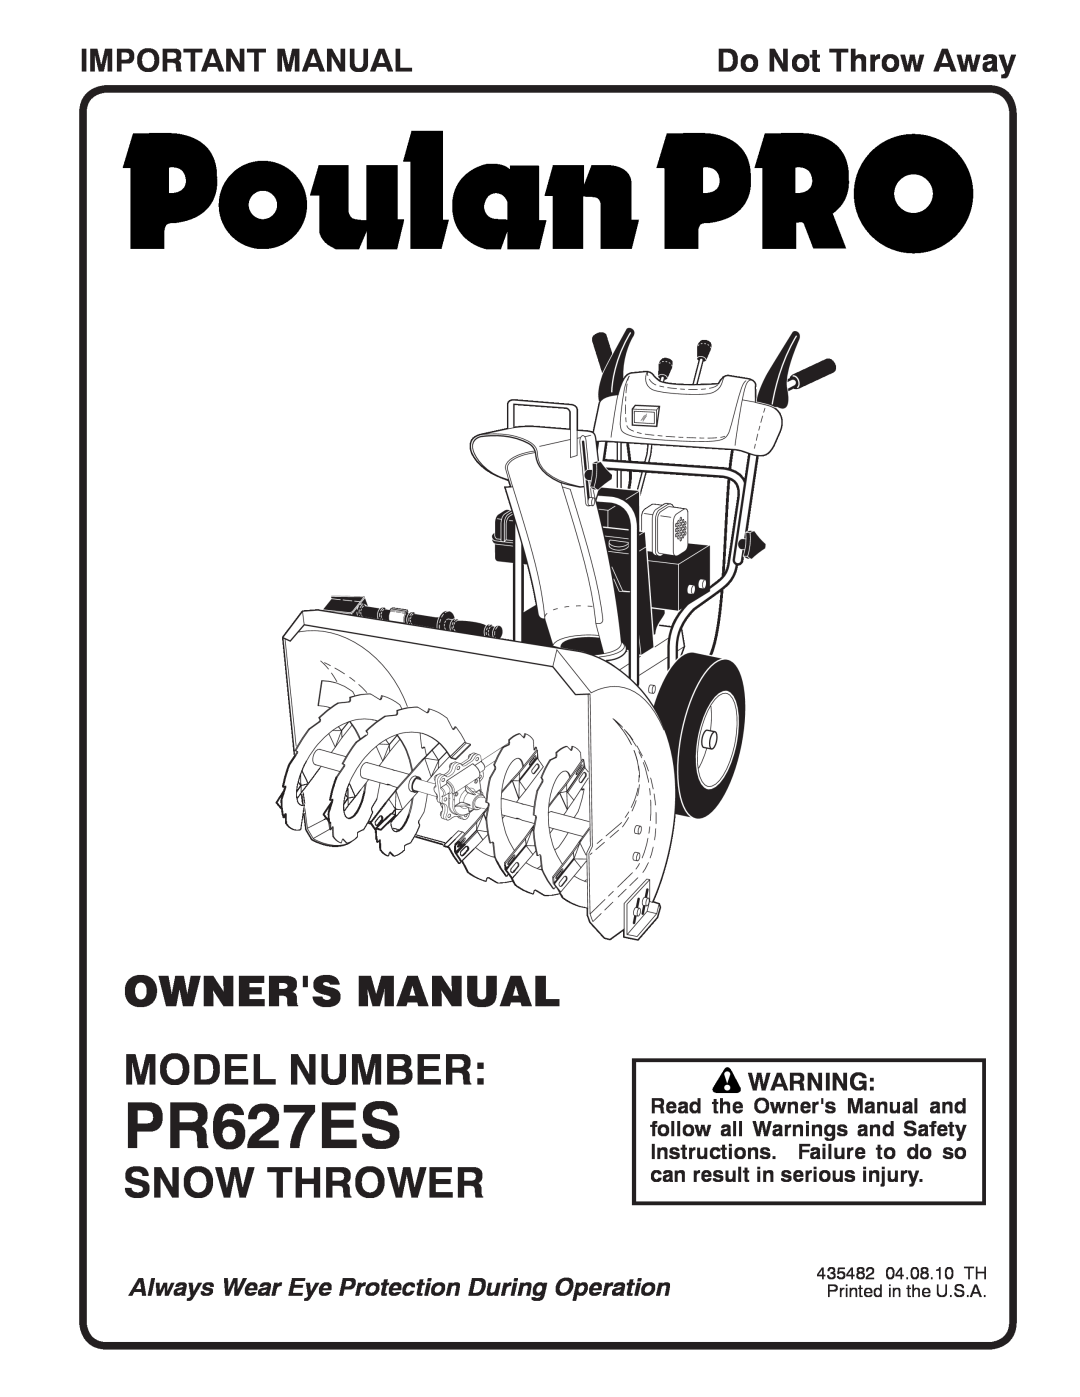 Poulan 96192003800, 435482 owner manual Snow Thrower, Important Manual, PR627ES, Do Not Throw Away 